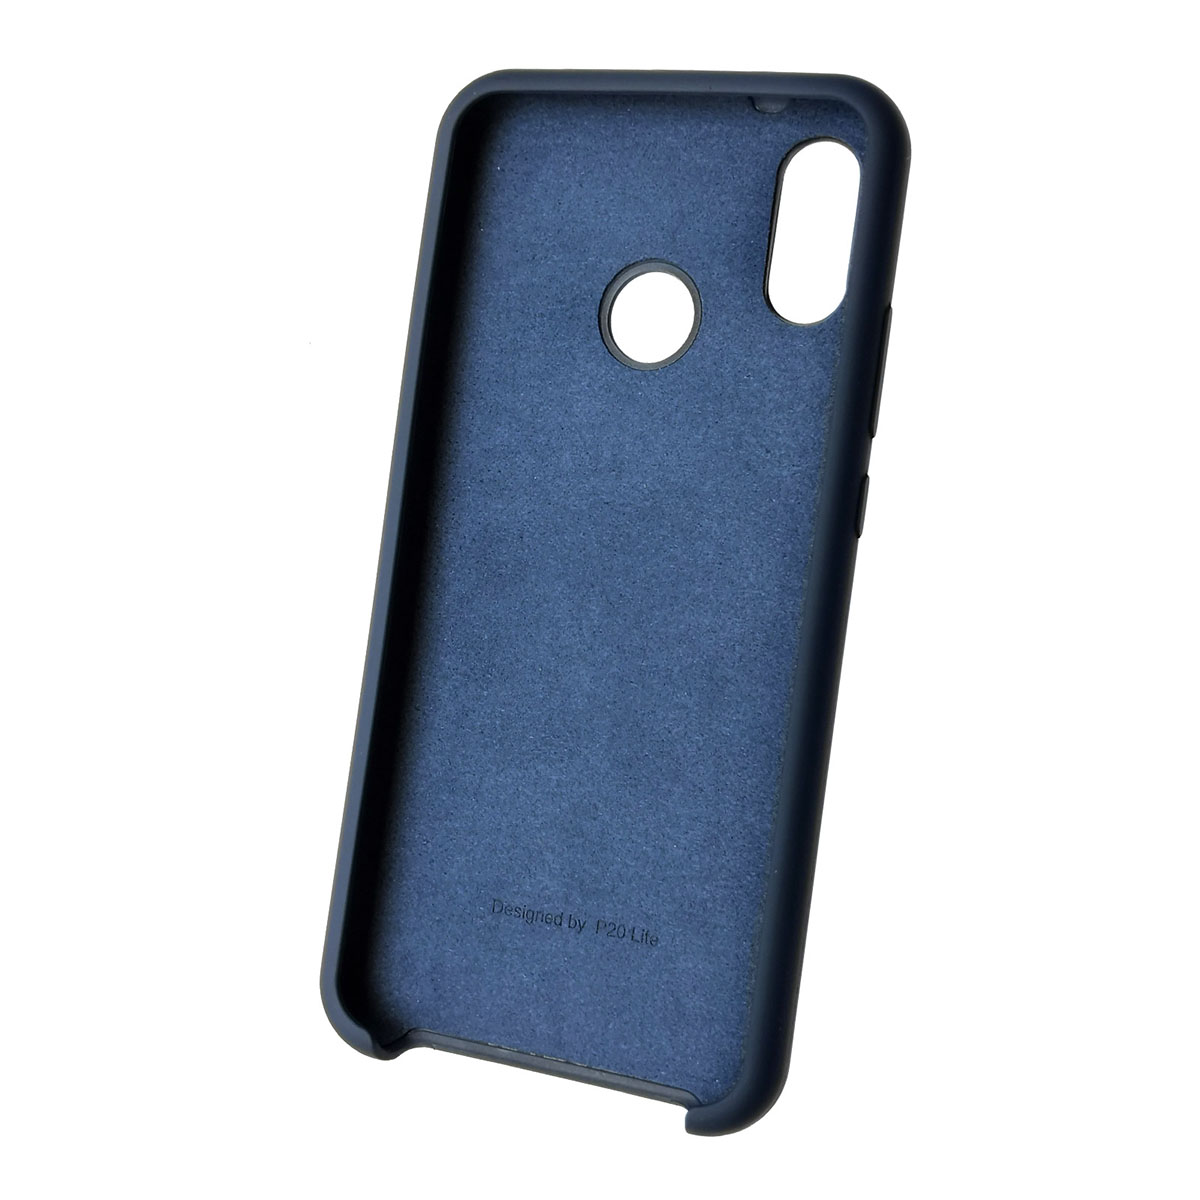 Чехол накладка Silicon Cover для HUAWEI P20 Lite, Nova 3E, силикон, бархат, цвет синий кобальт.